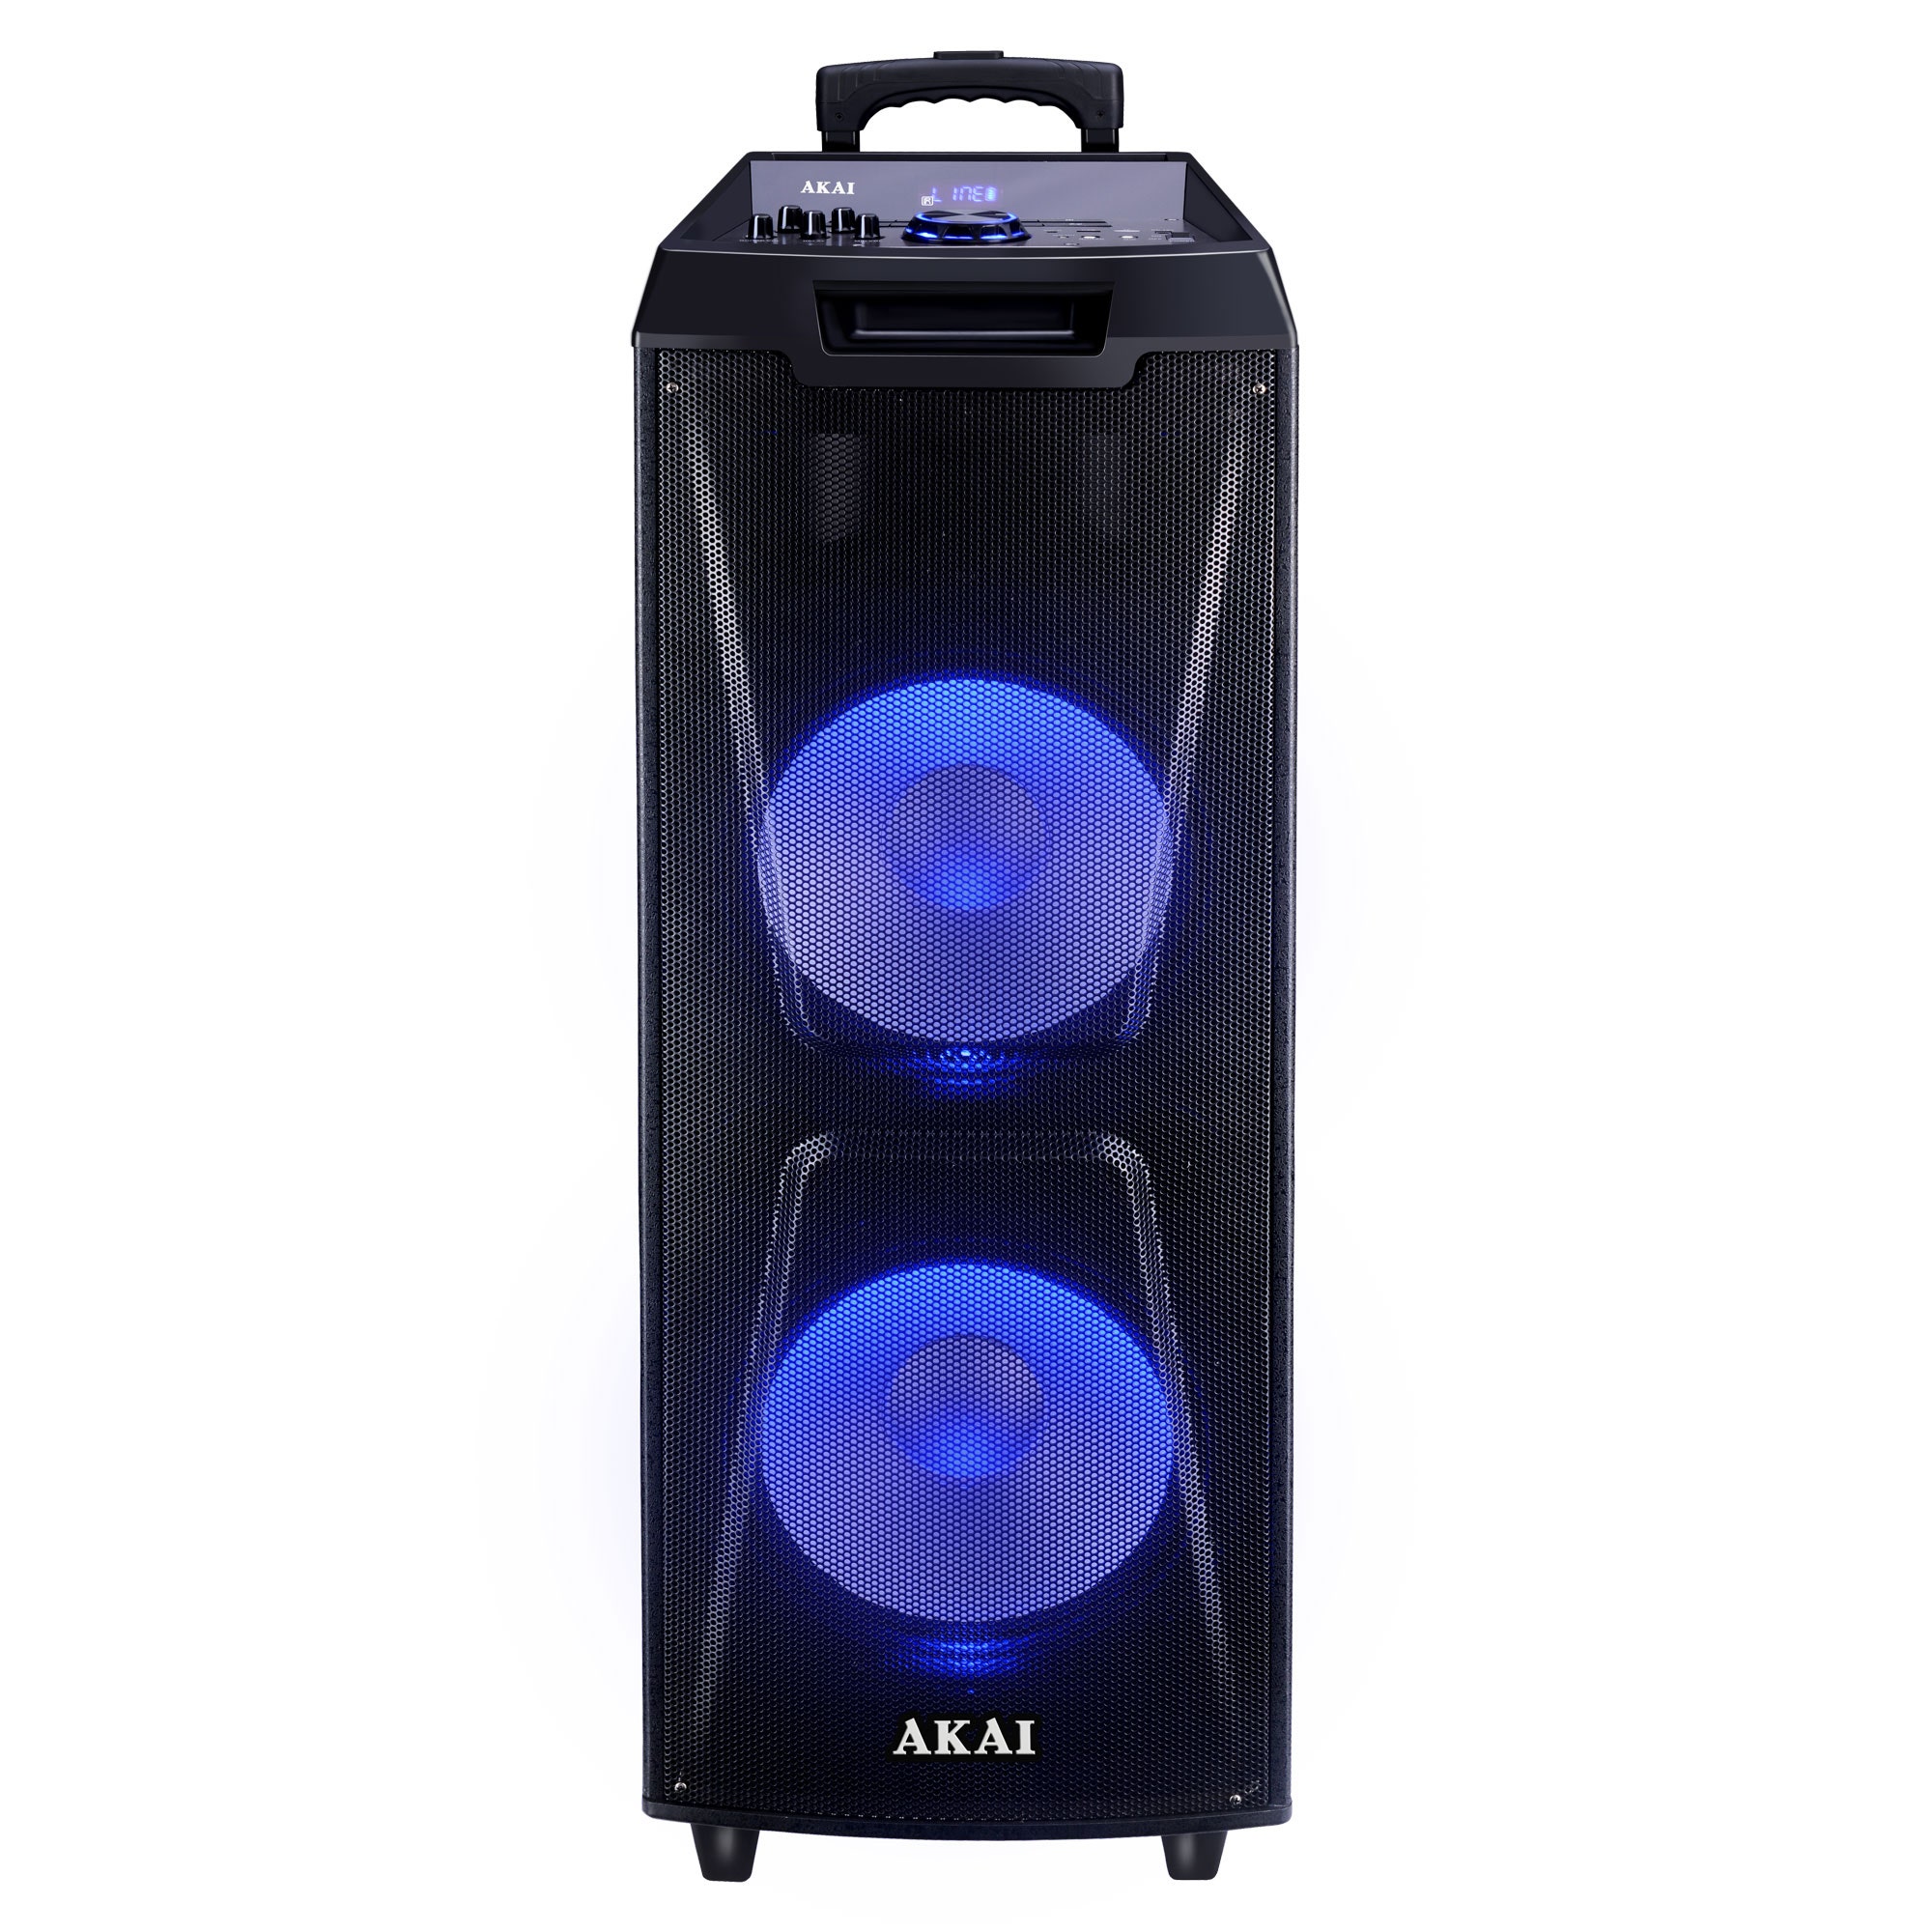 Boxa portabila activa Akai ABTS-AW122, 60 W, Bluetooth, USB, TF slot, Aux in, radio FM, sistem lumini disco, functie Record, negru, microfon, telecomanda